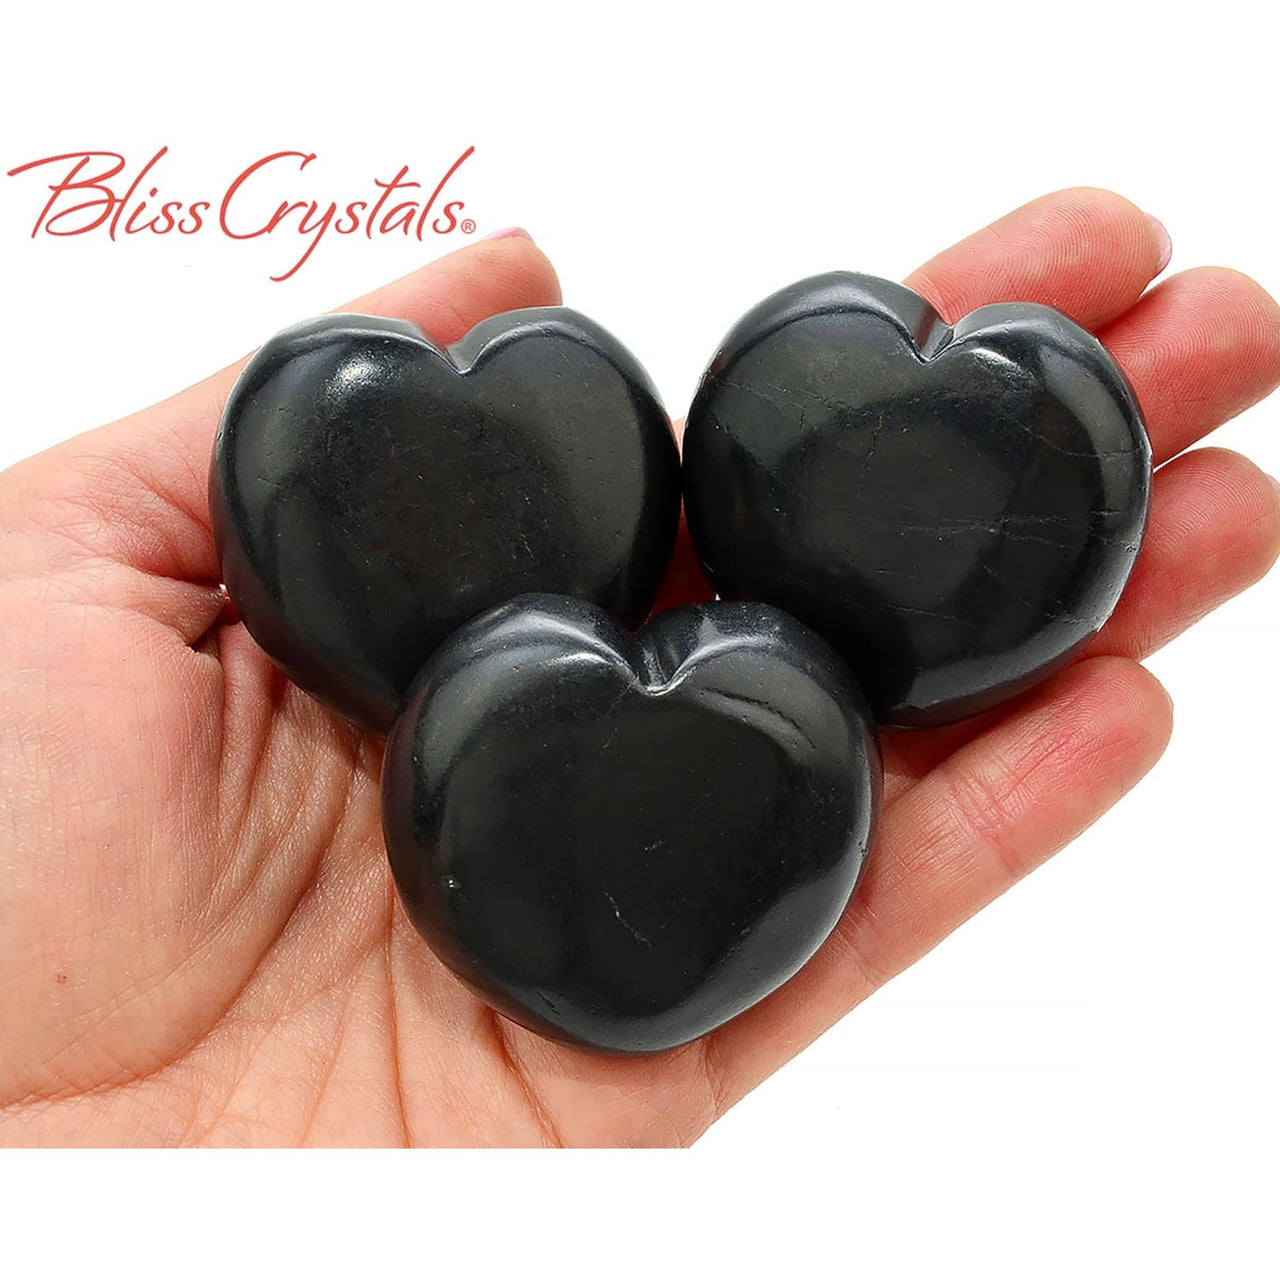 1 SHUNGITE Polished Heart + Bag Healing Crystal and Stone 